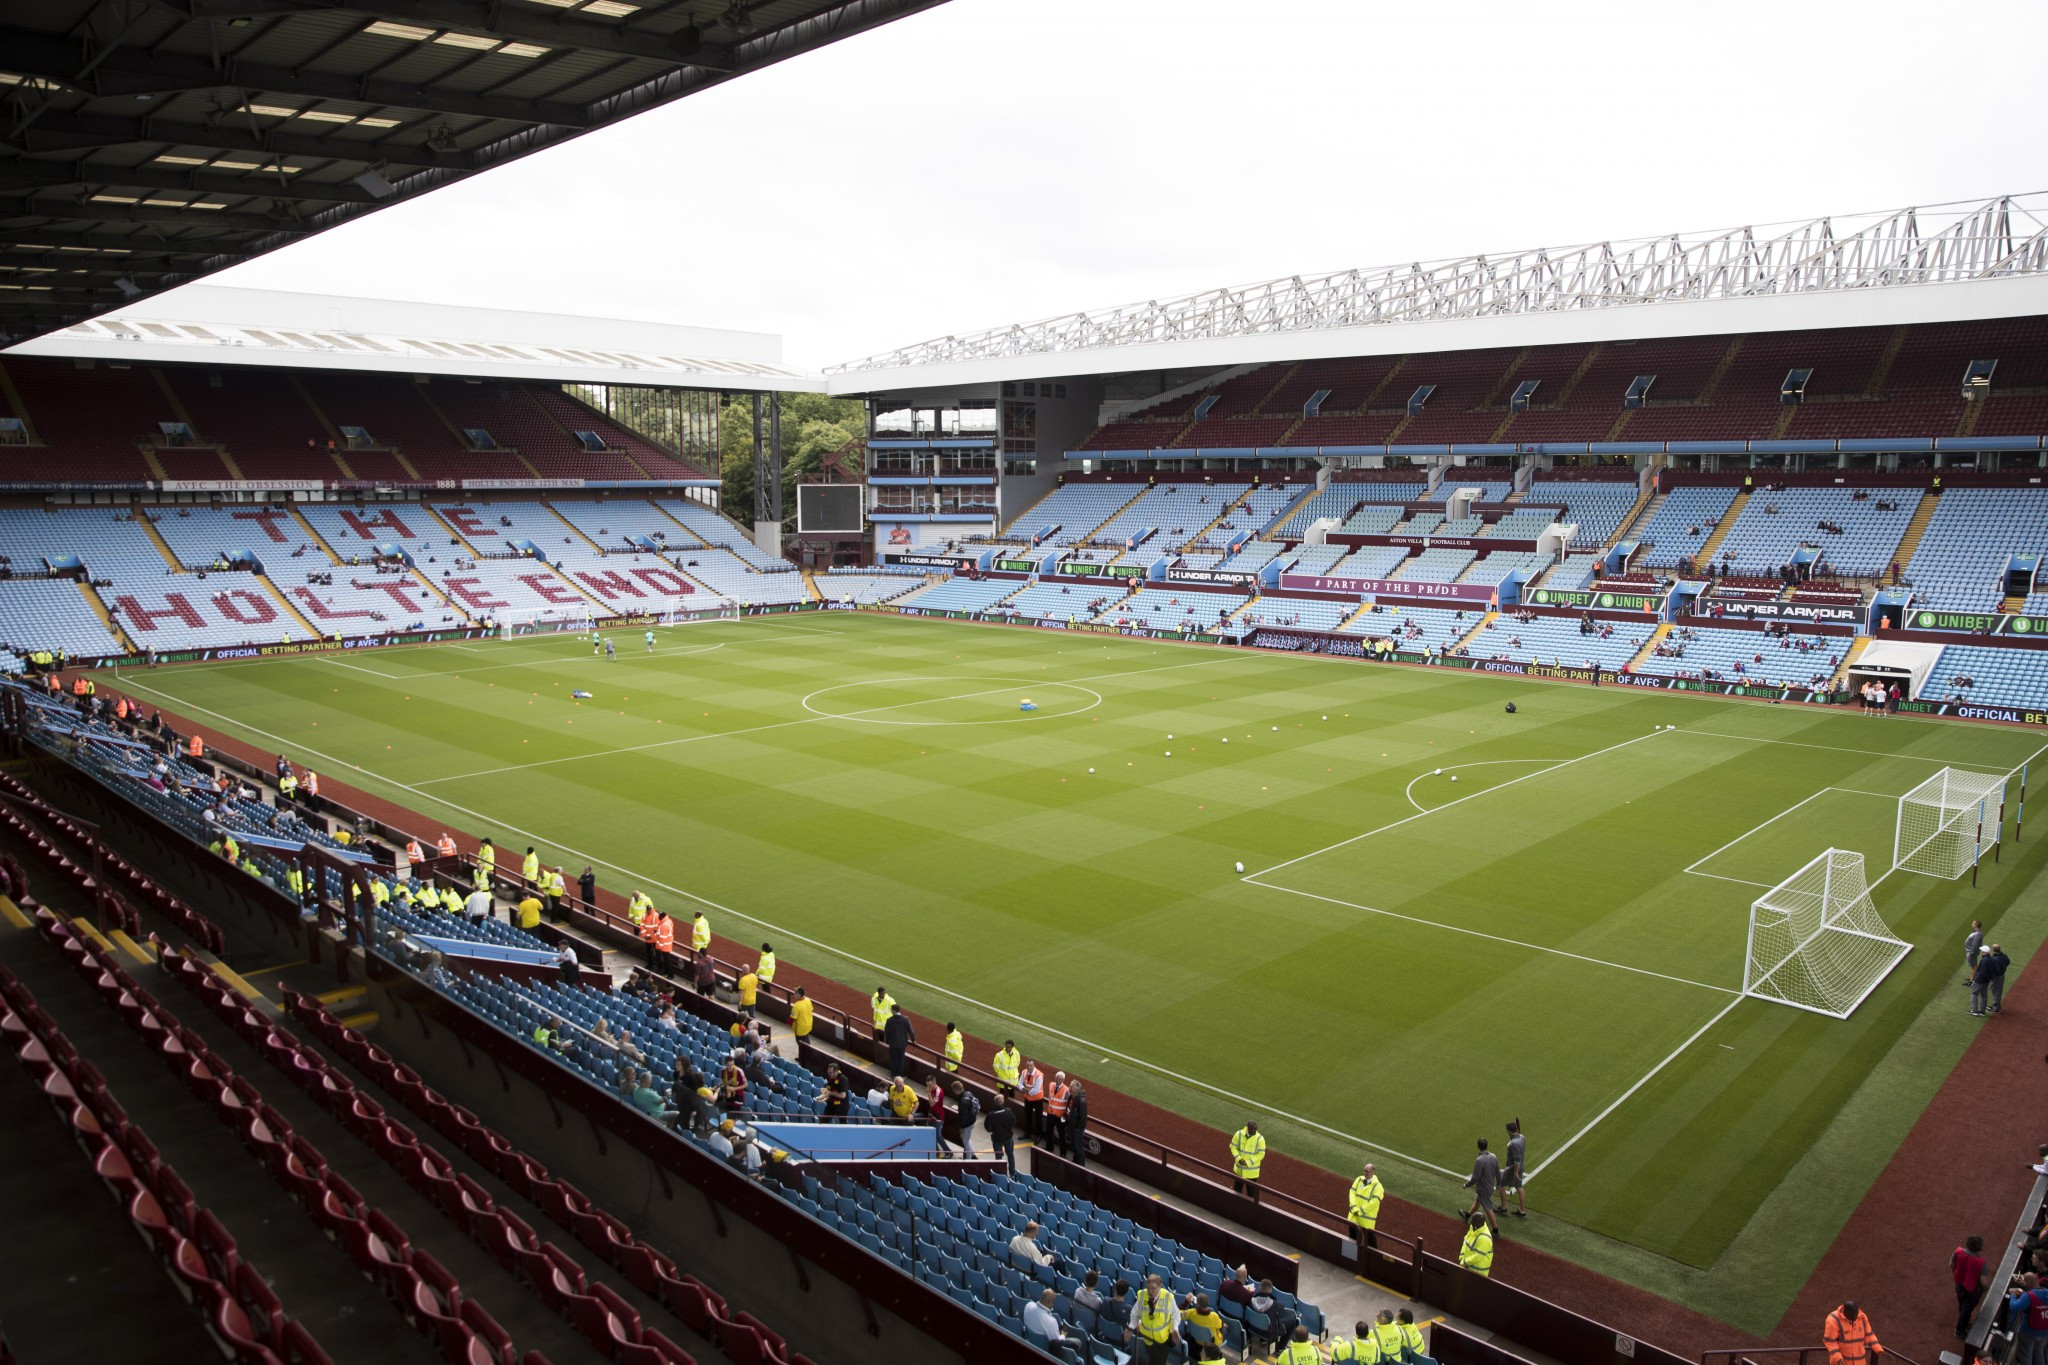 Aston Villa chief executive gives backing to Birmingham 2022 bid